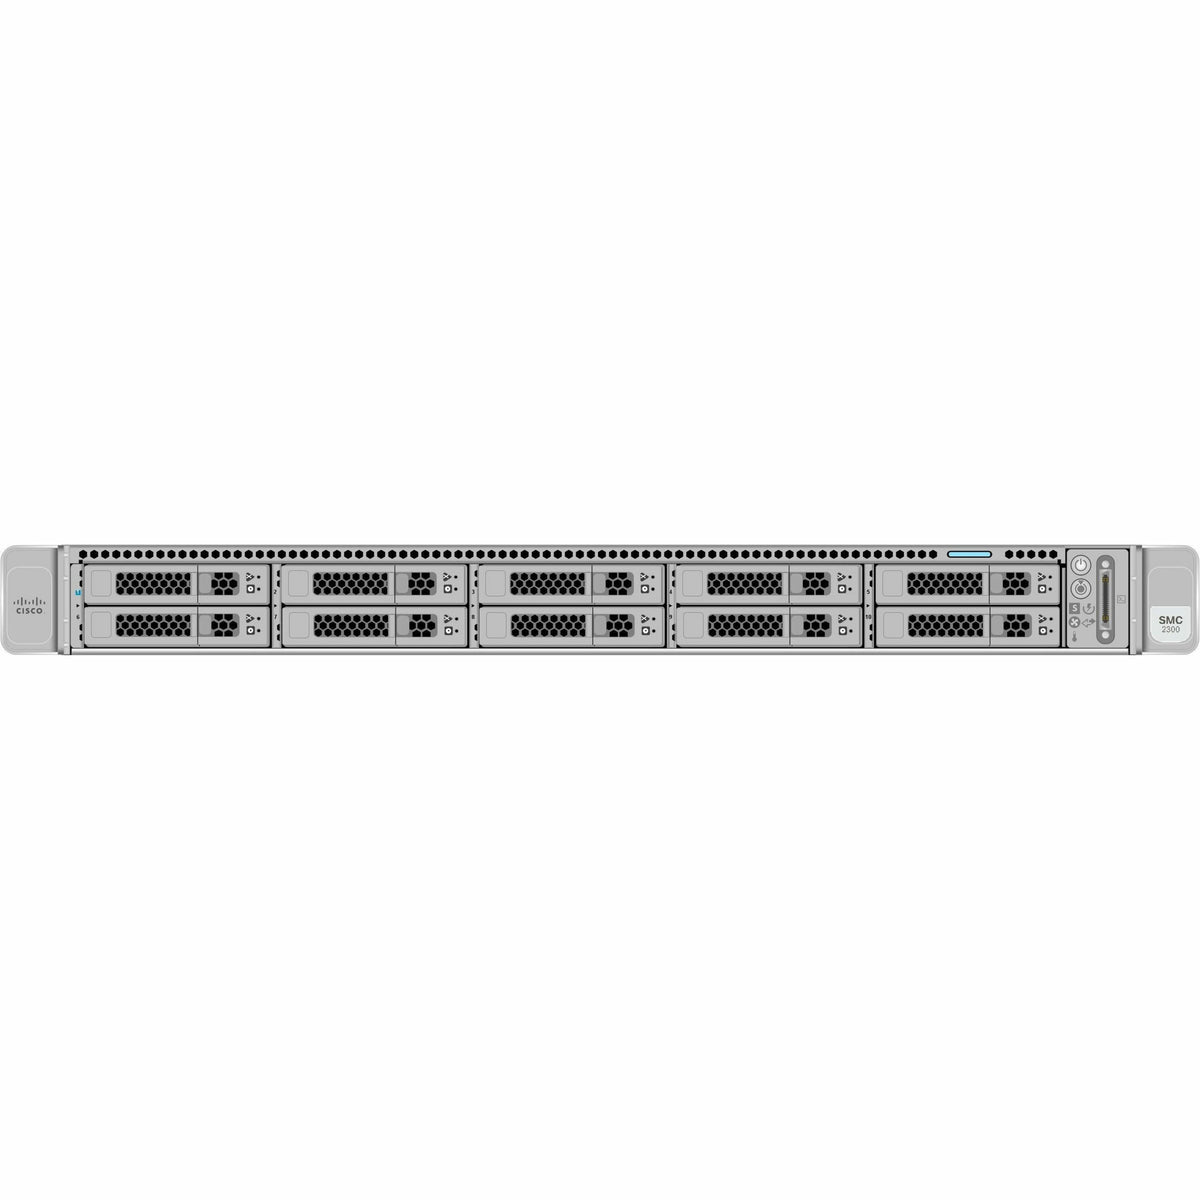 Cisco Network Monitoring Appliance - ST-SMC2300-K9